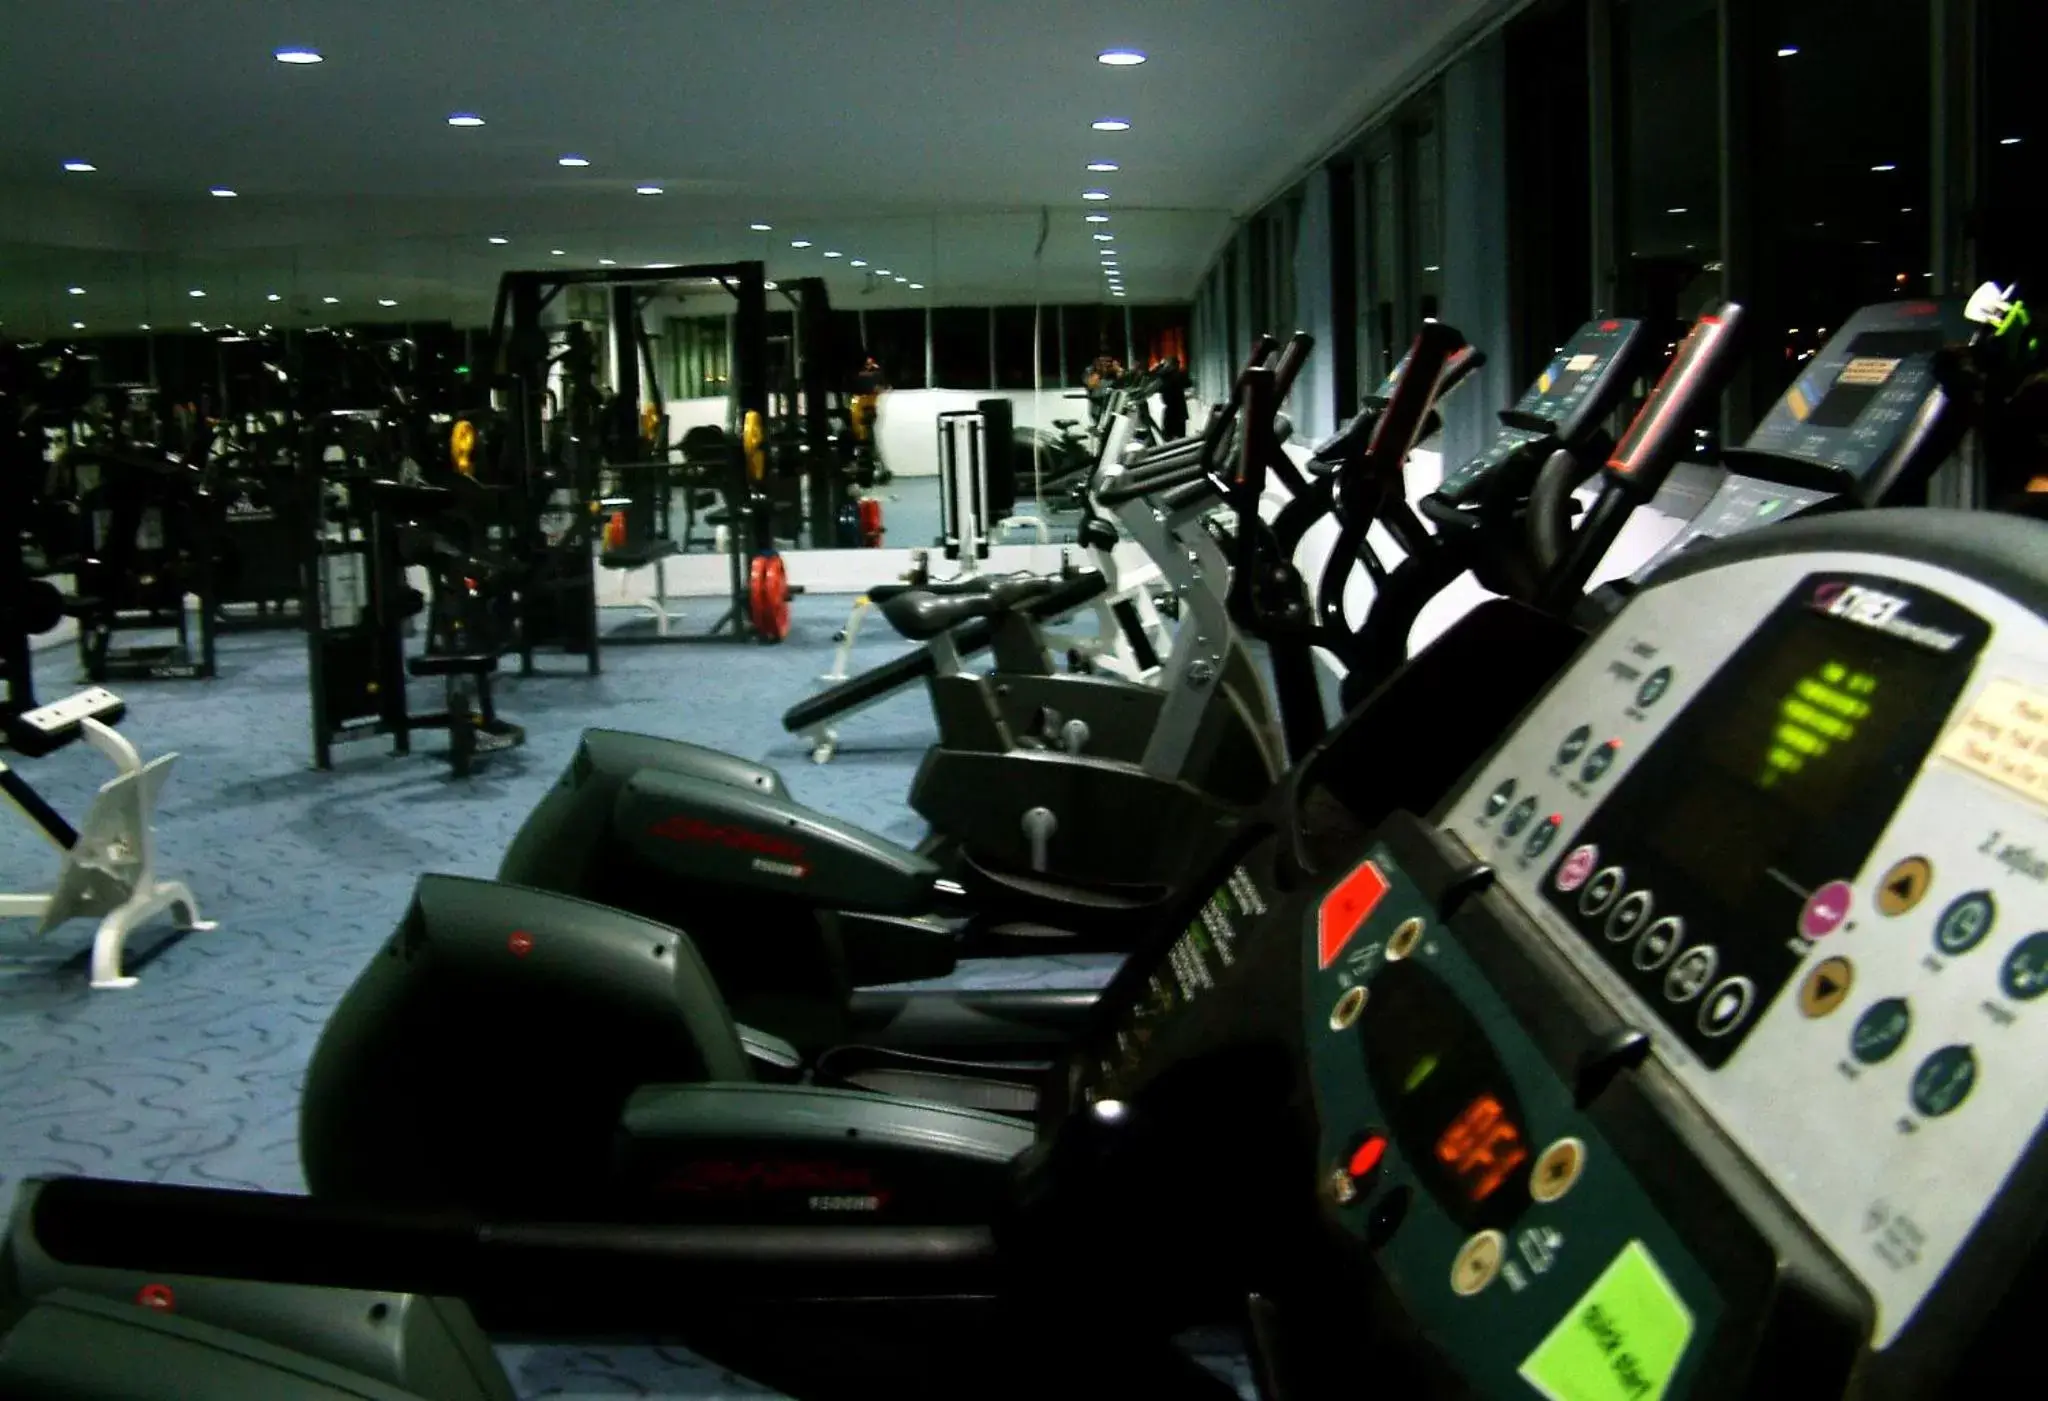 Fitness centre/facilities, Fitness Center/Facilities in Convenient Park Bangkok